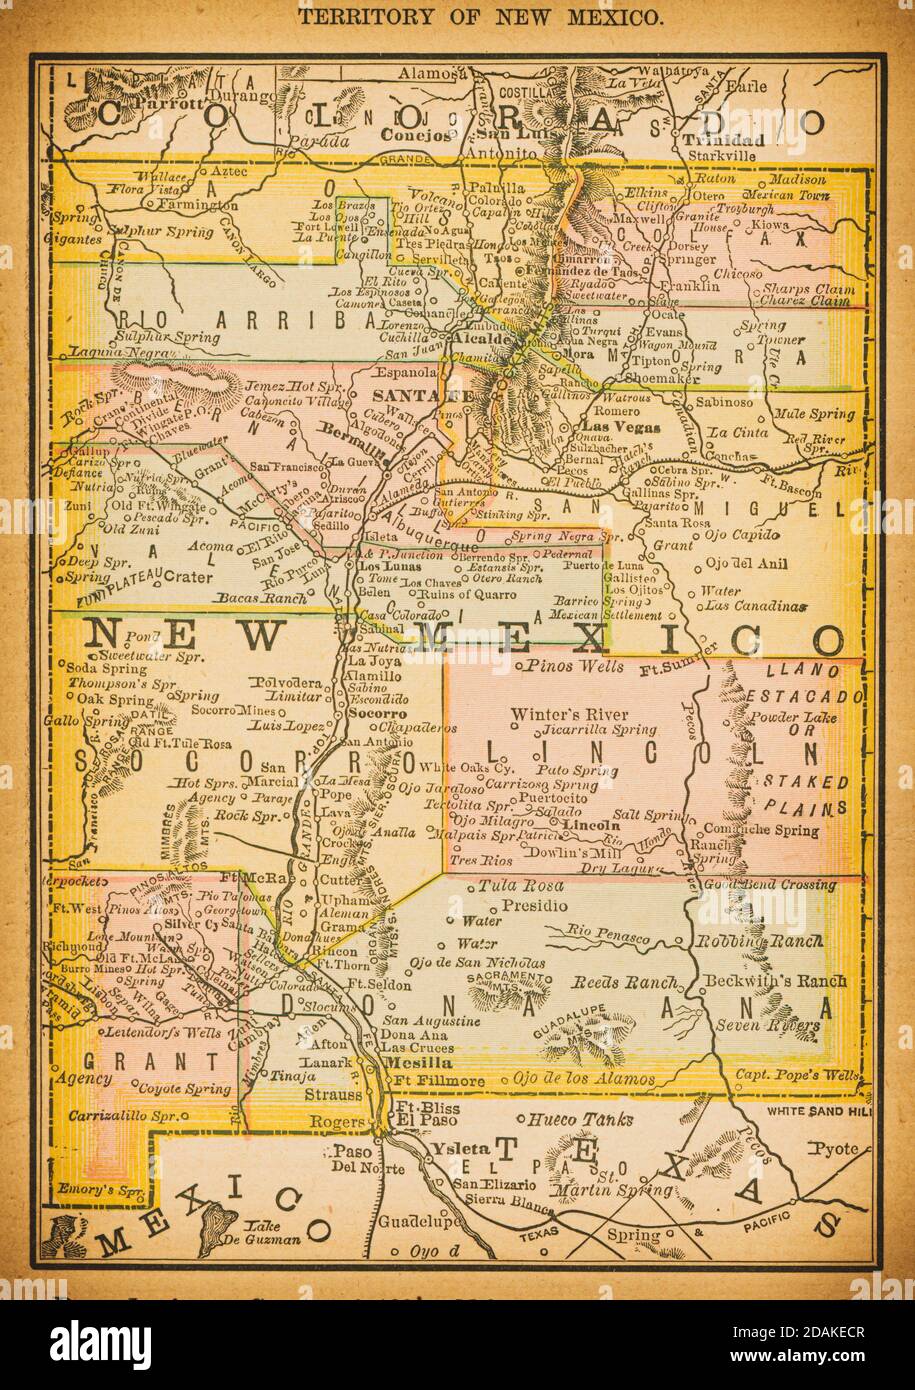 Karte von New Mexico aus dem 19. Jahrhundert. Veröffentlicht im New Dollar Atlas of the United States and Dominion of Canada. (Rand McNally & Co's, Chicago, 1884). Stockfoto